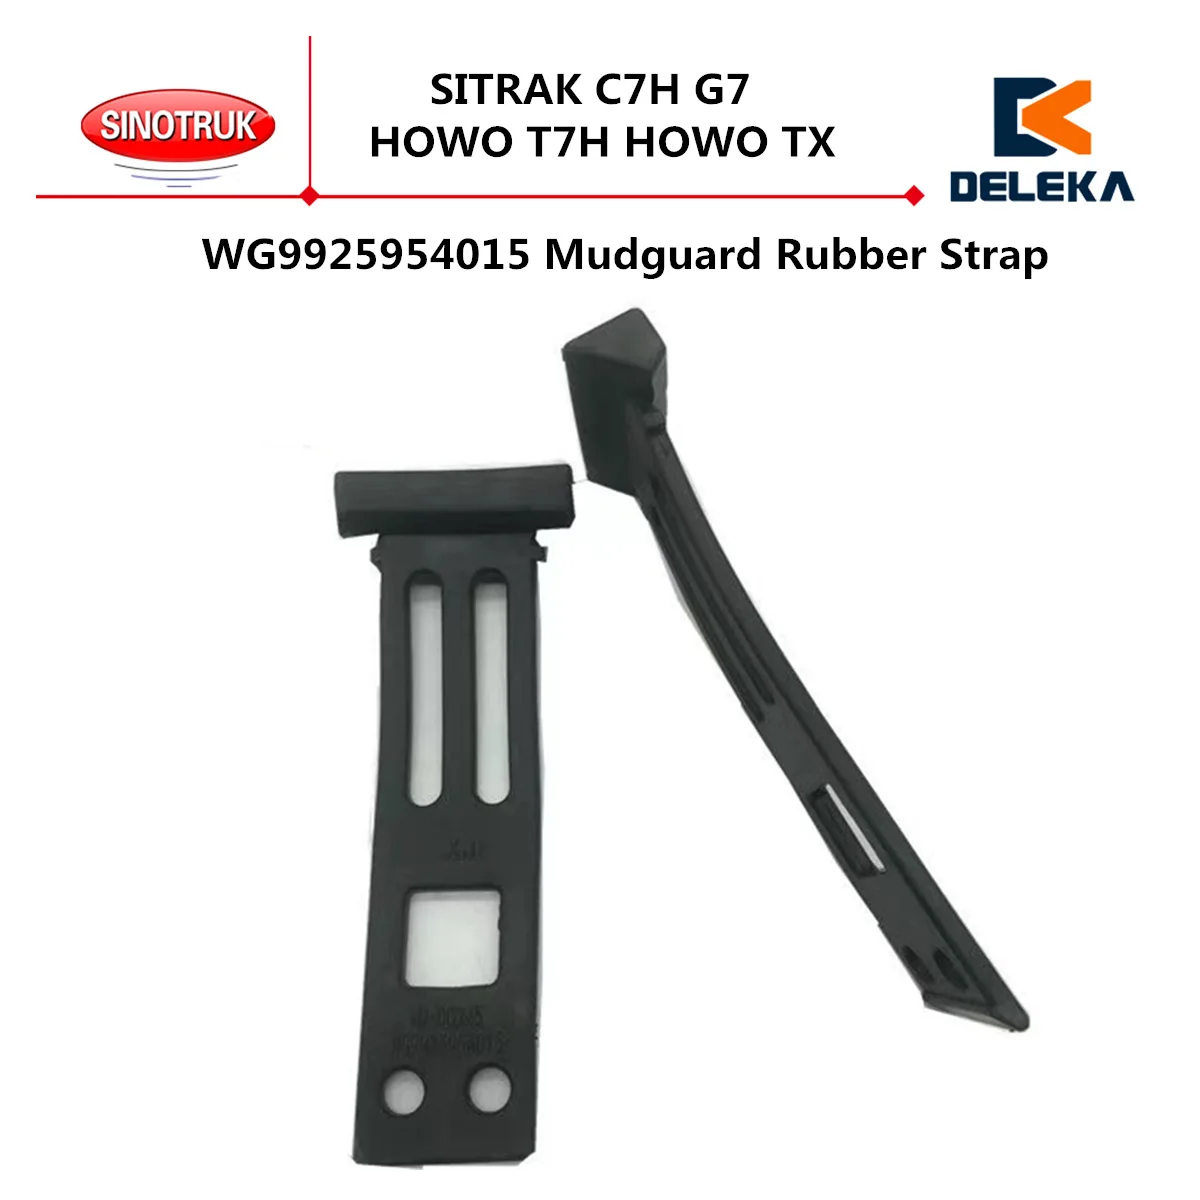 1 pic WG9925954015 Mudguard Rubber Strap For CNHTC Sinotruk SITRAK C7H G7 HOWO T7H HOWO TX Rear Wheel